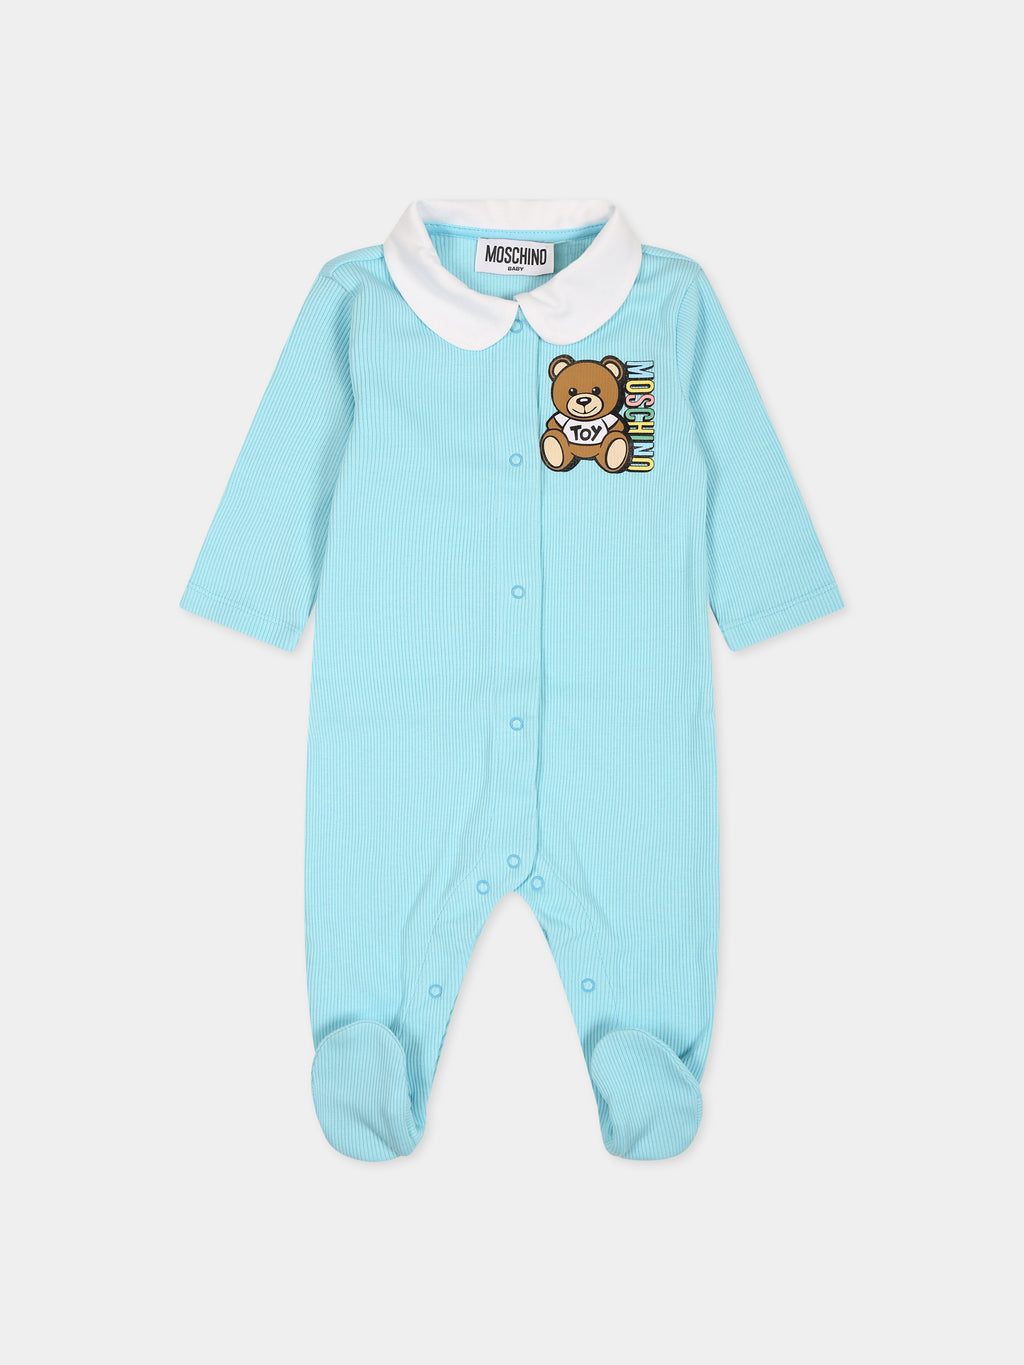 Light blue babygrow for baby boy with Teddy Bear and logo